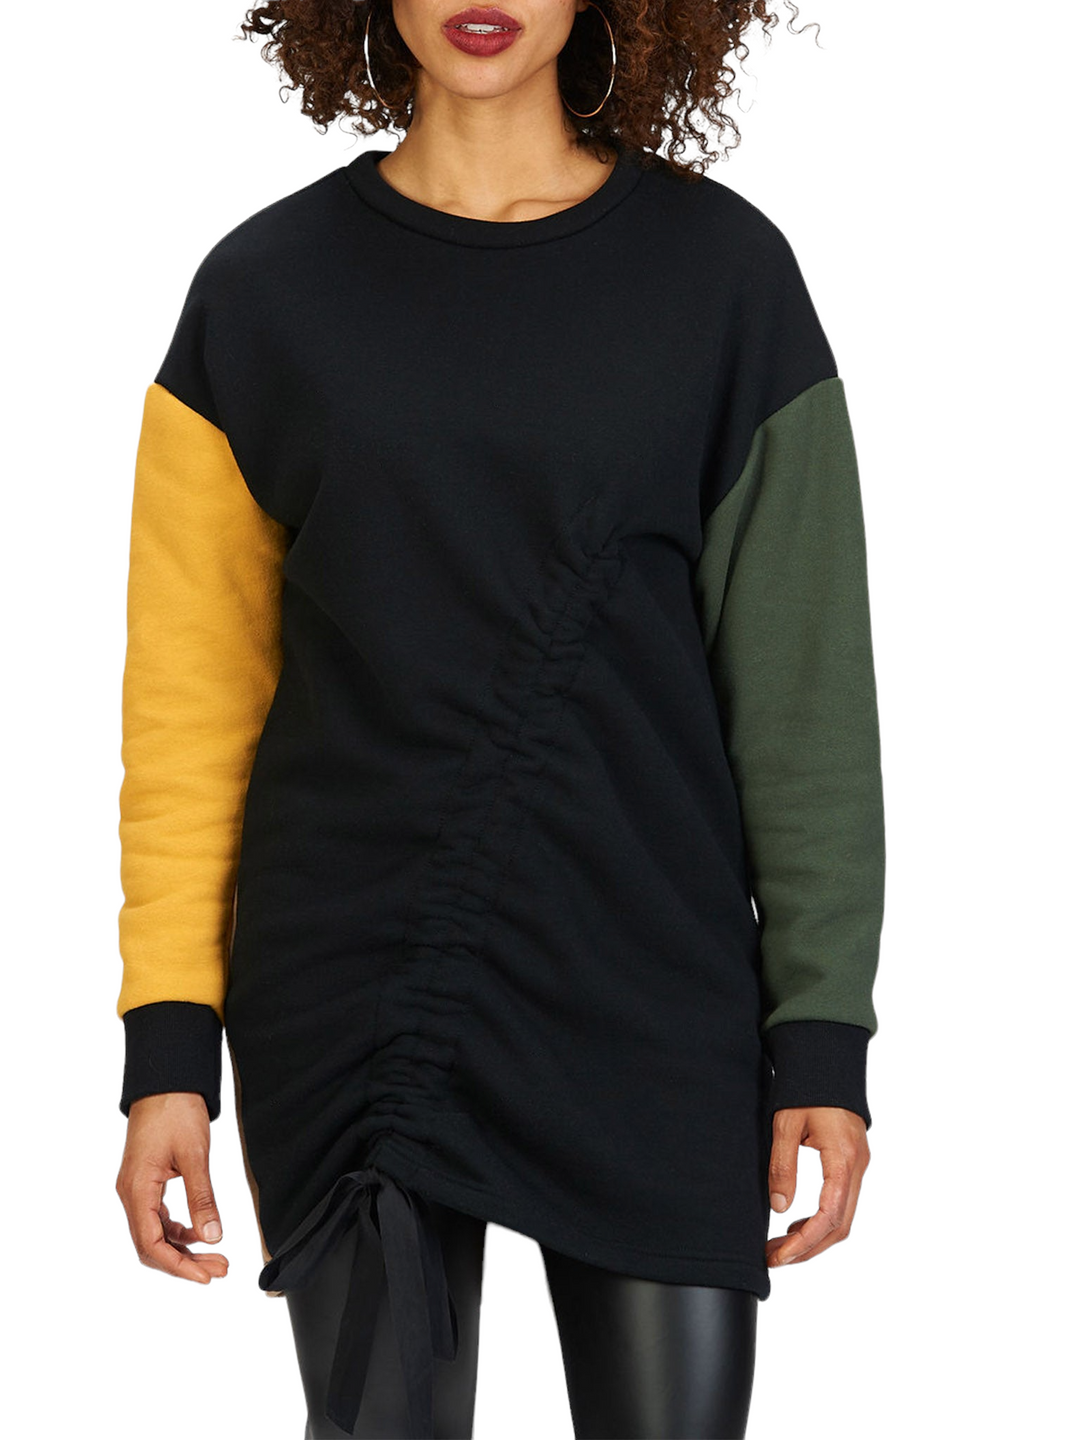 Ruched Sweatshirt Dress (40% OFF)